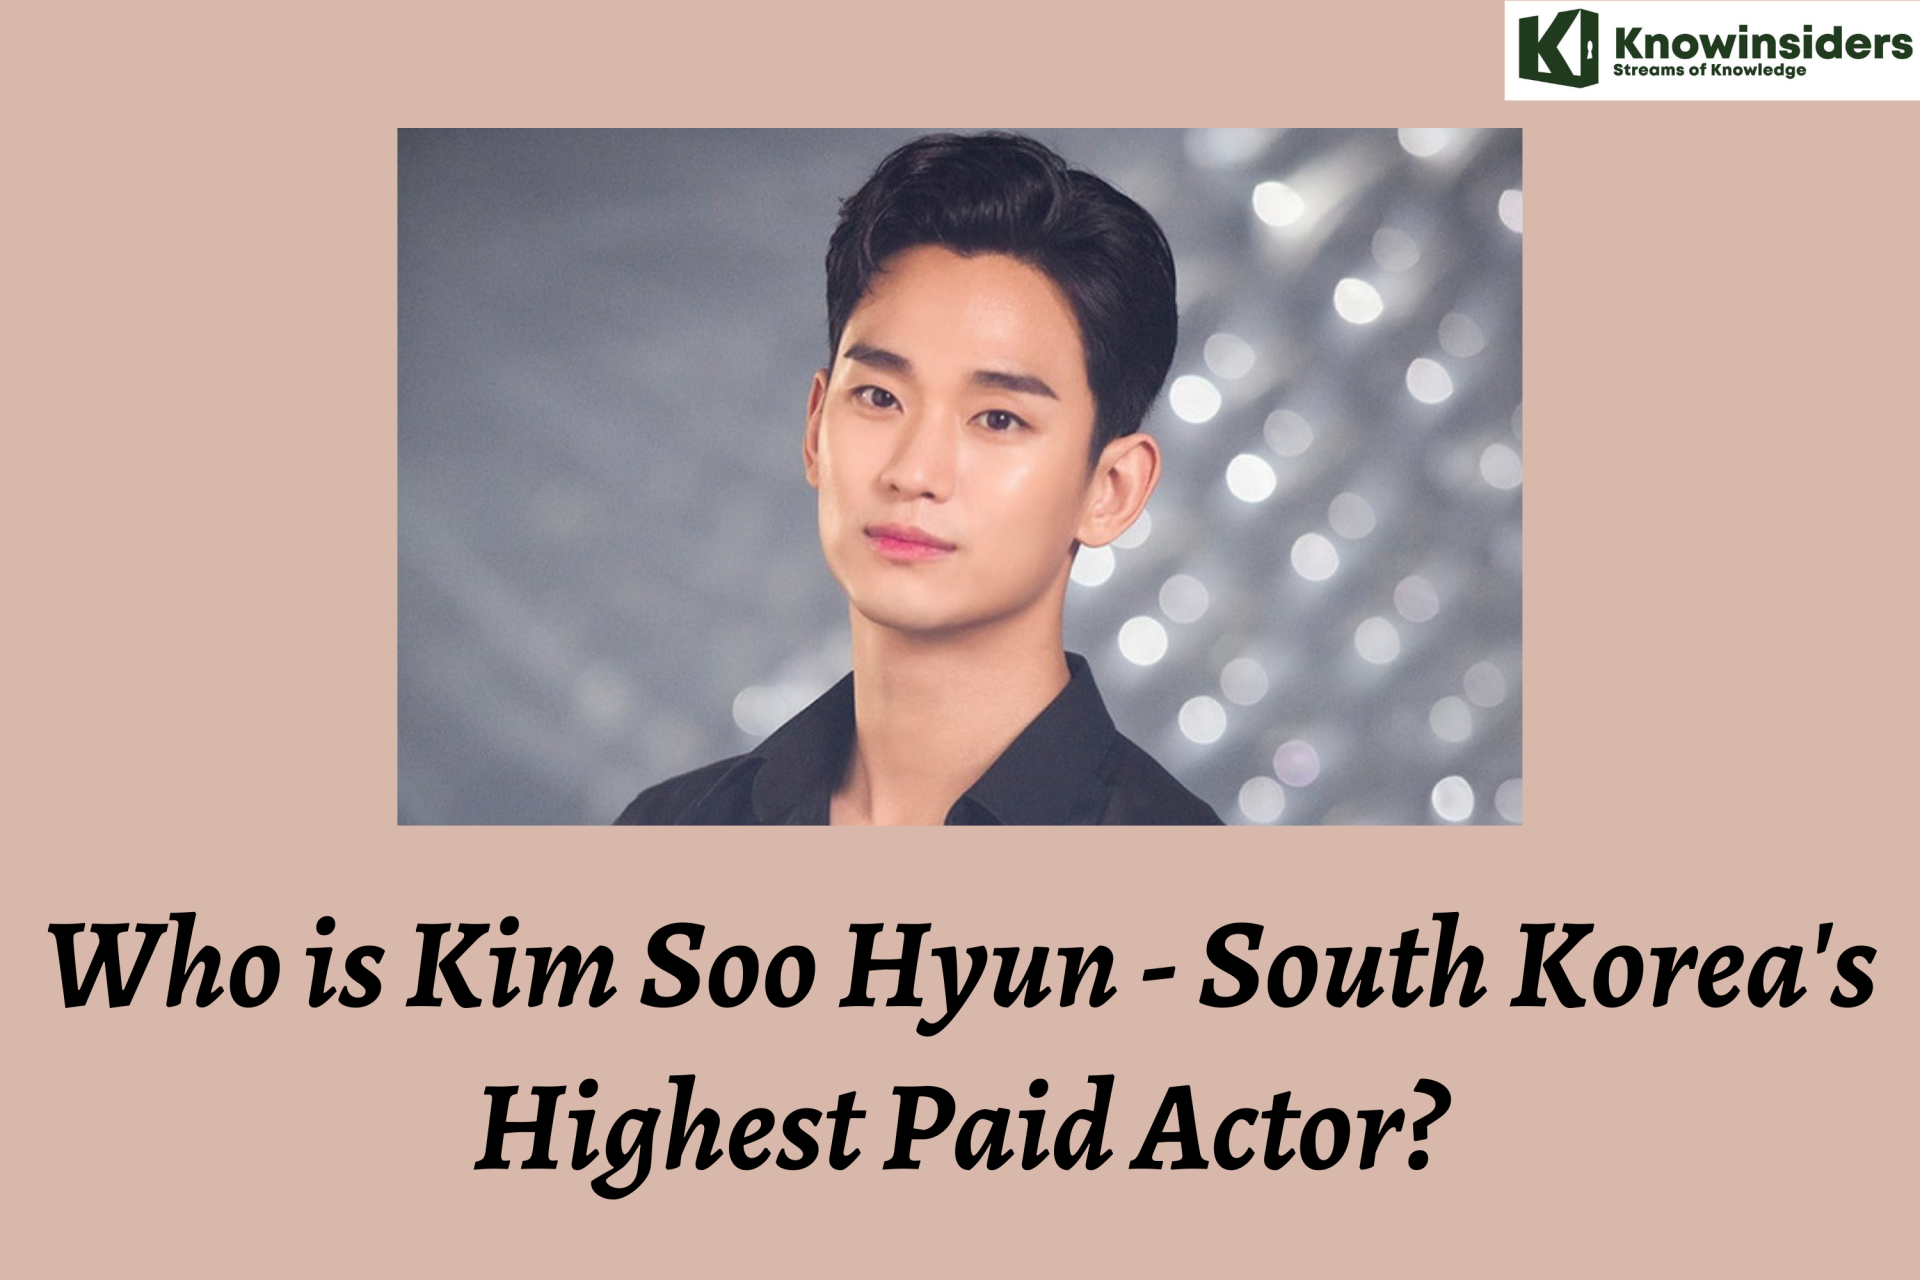 Who is Kim Soo Hyun - South Korea's Highest Paid Actor